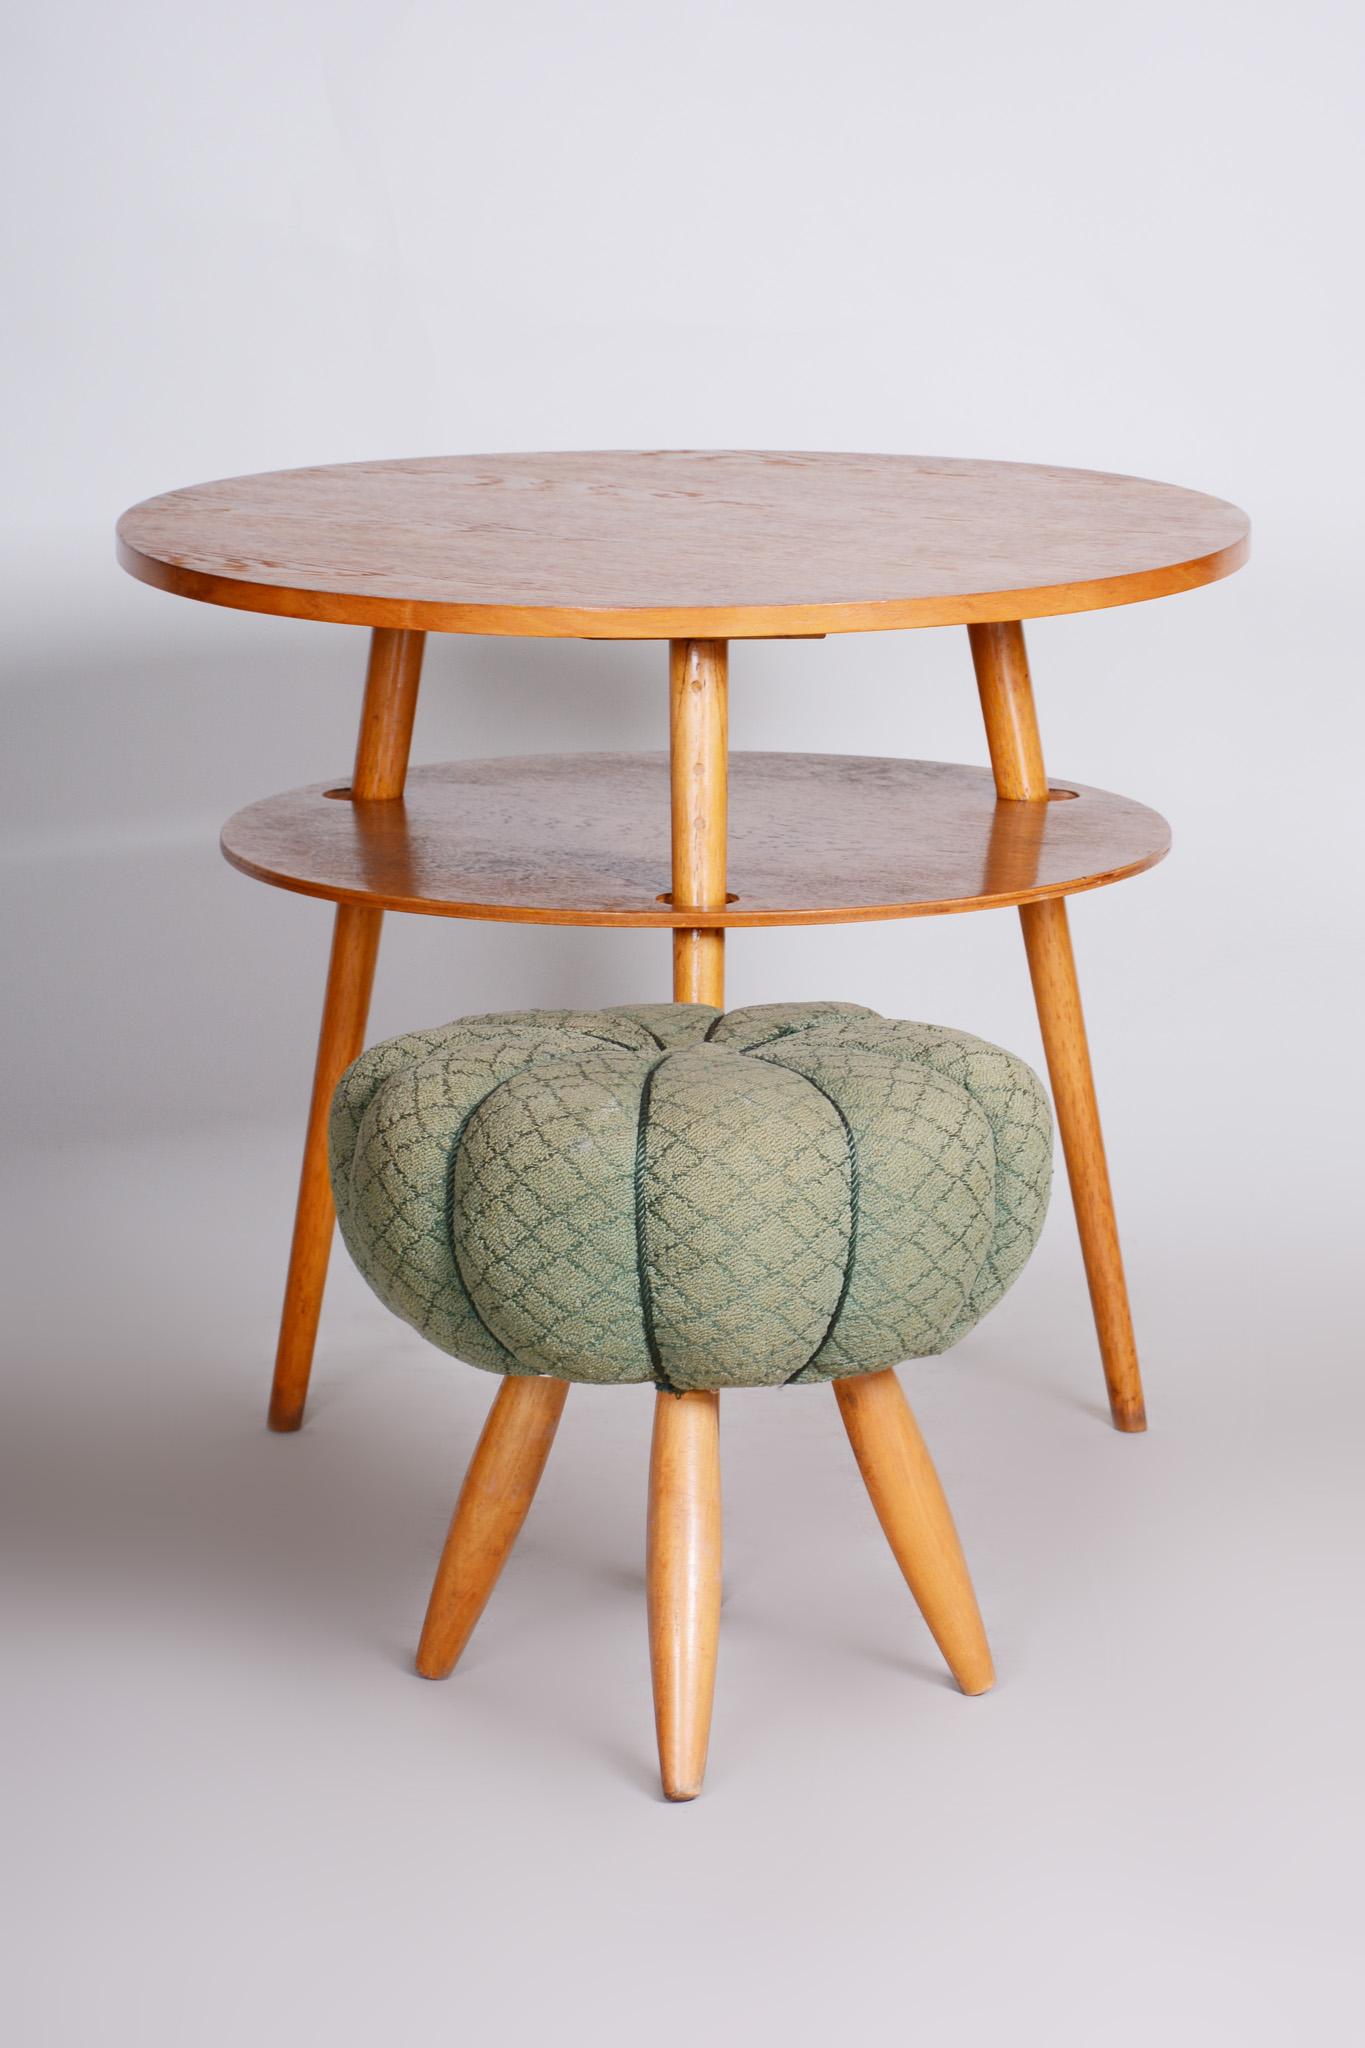 Midcentury green stool, 
Original well preserved condition.

Period: 1950-1959
Material: Beech
Source: Czechia (Czechoslovakia).